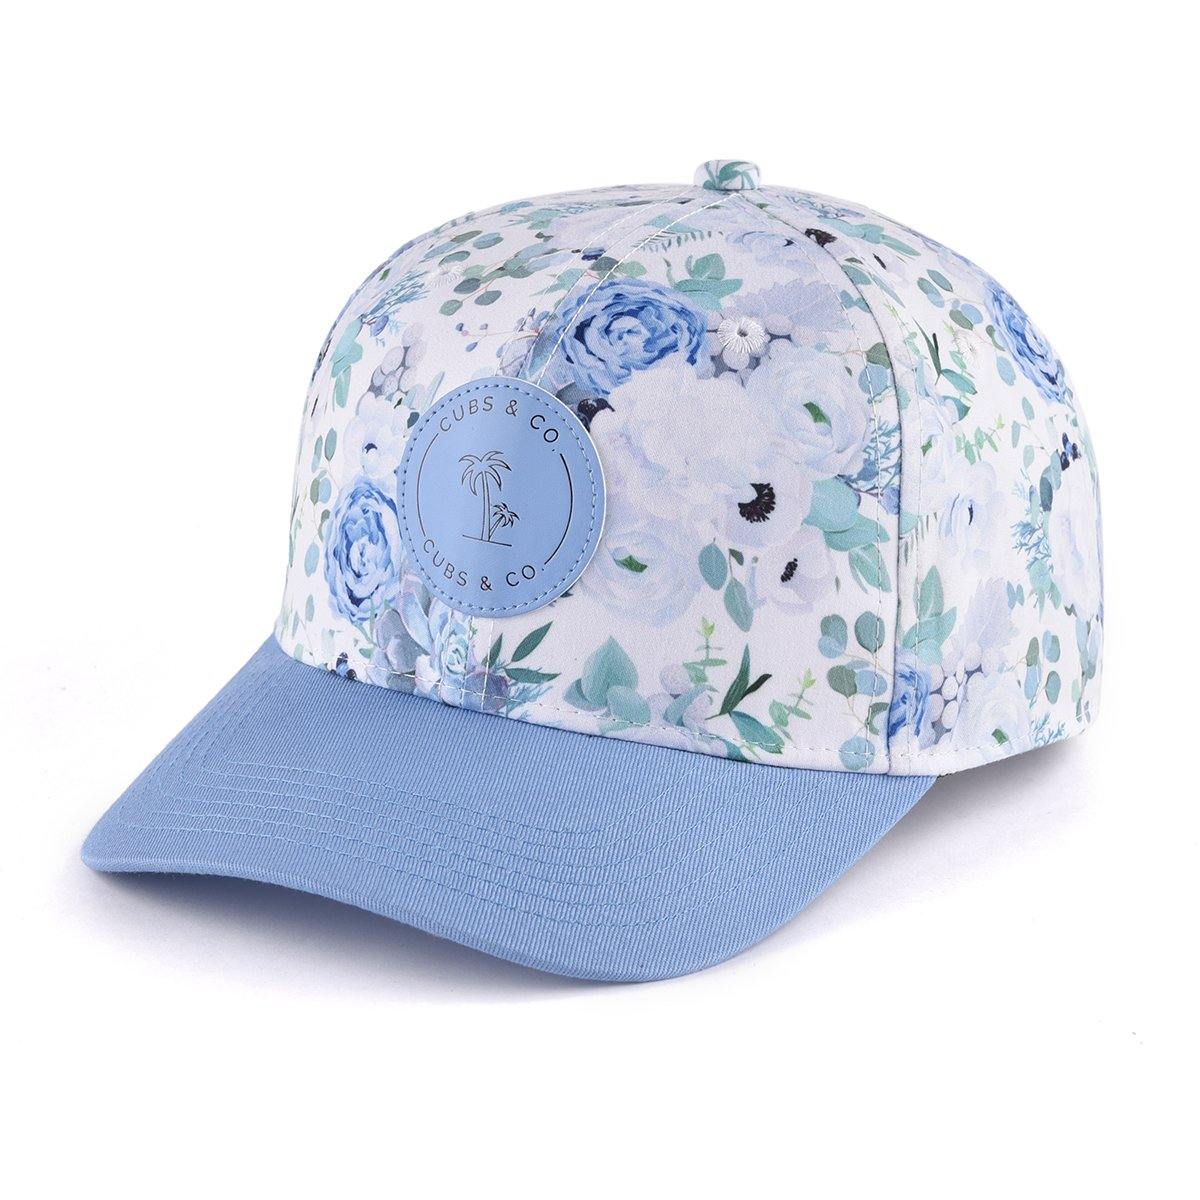 Kids and women's blue floral baseball snapback cap. Cubs & Co. Australia.